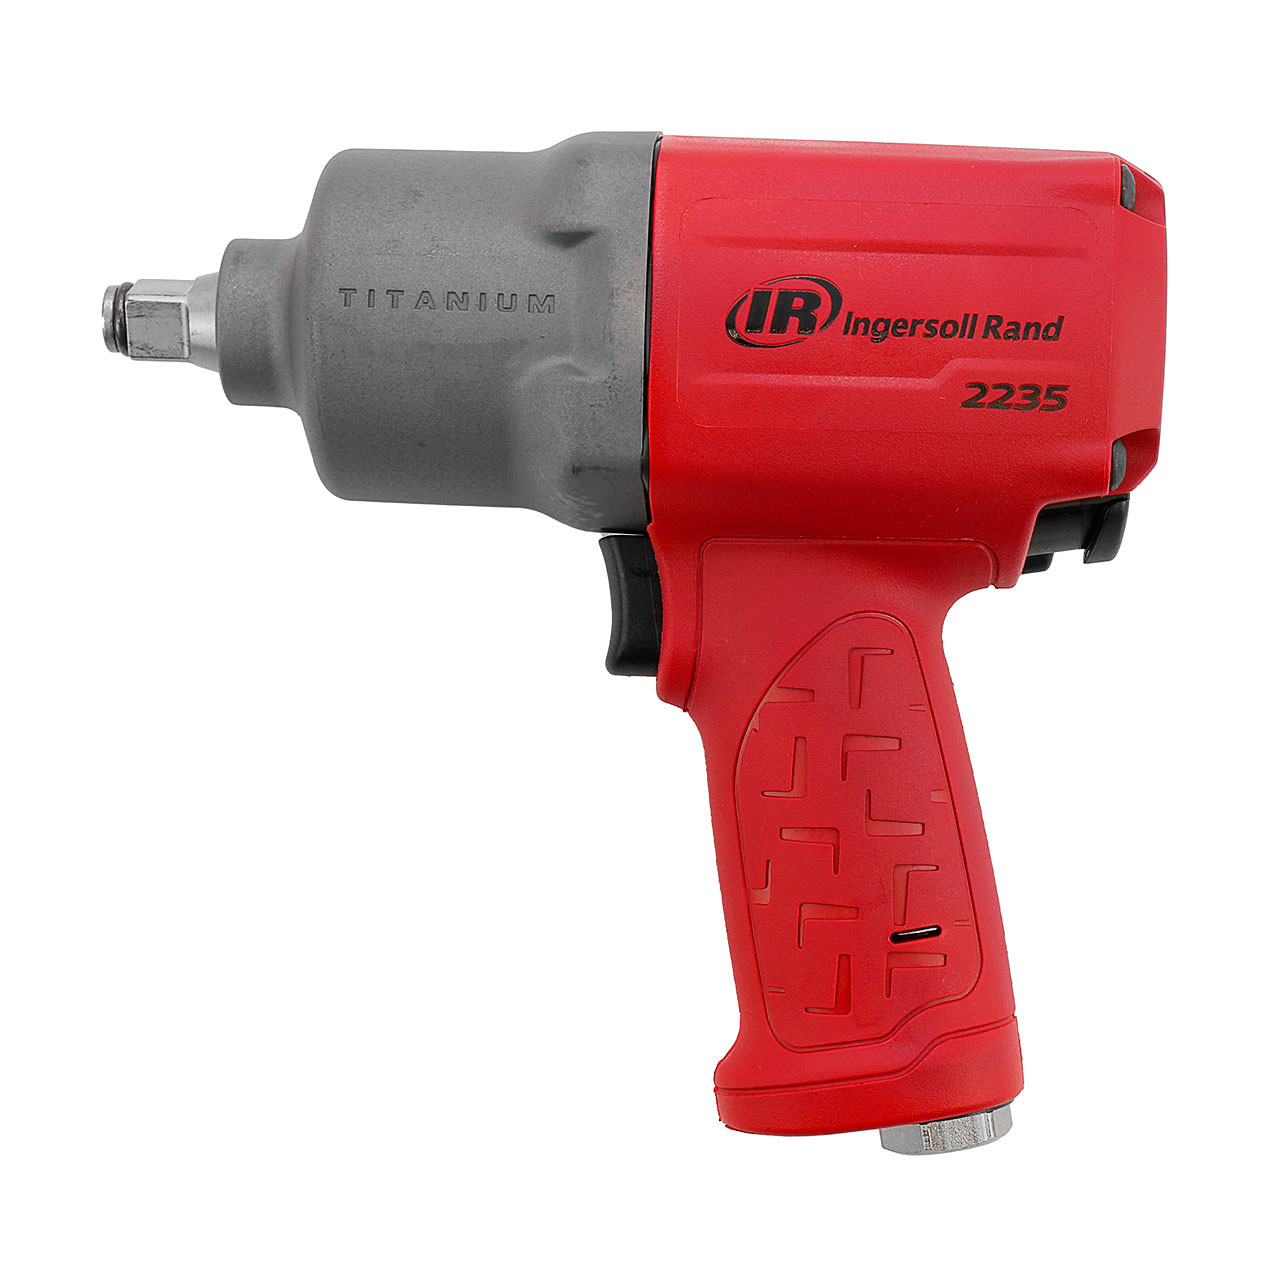 Ingersoll Rand 2235timax-r 1/2in kunci pas dampak udara, merah JB Tools